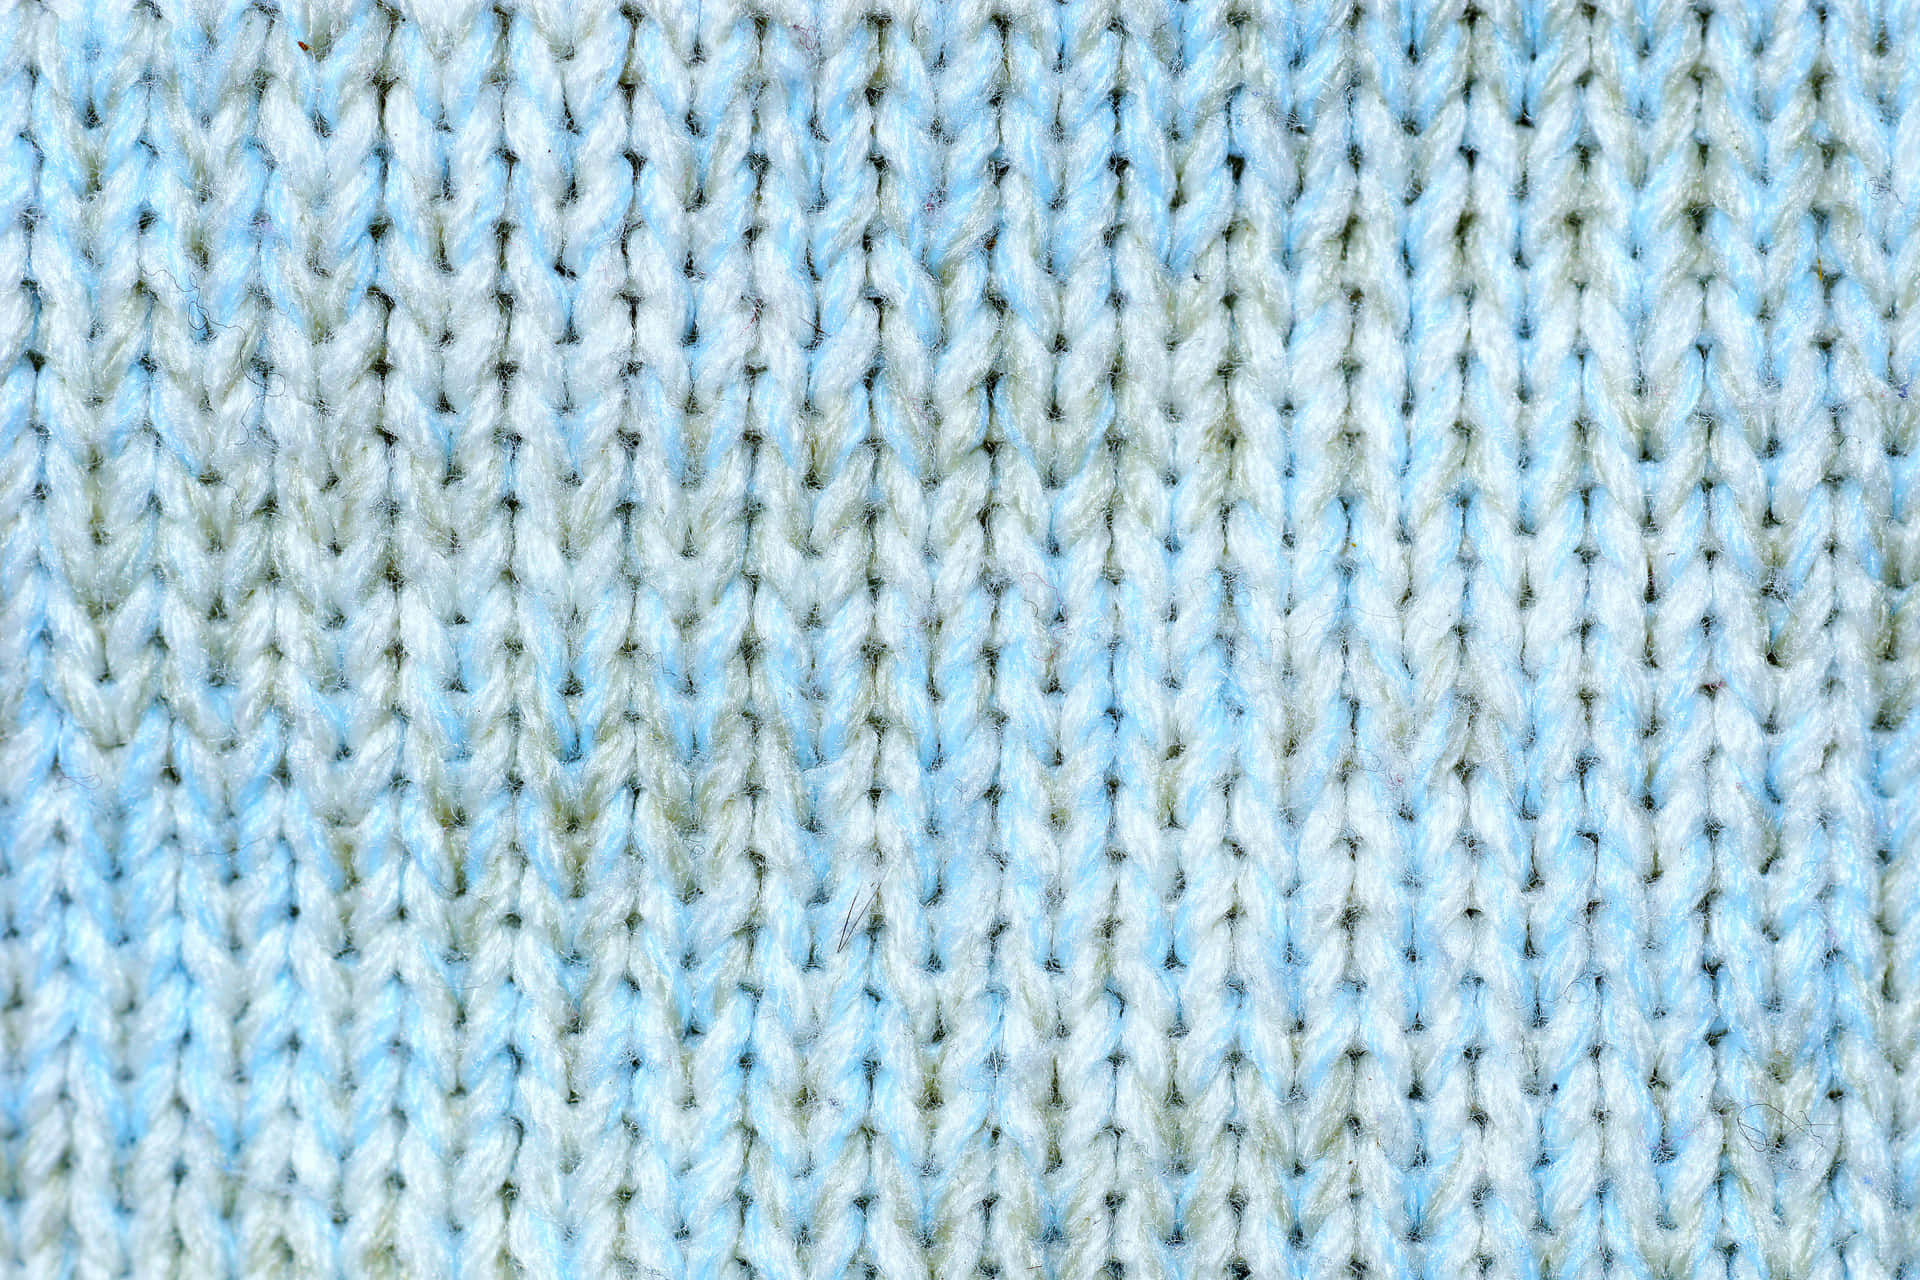 Stained Light Blue Knitting Yarn Wallpaper